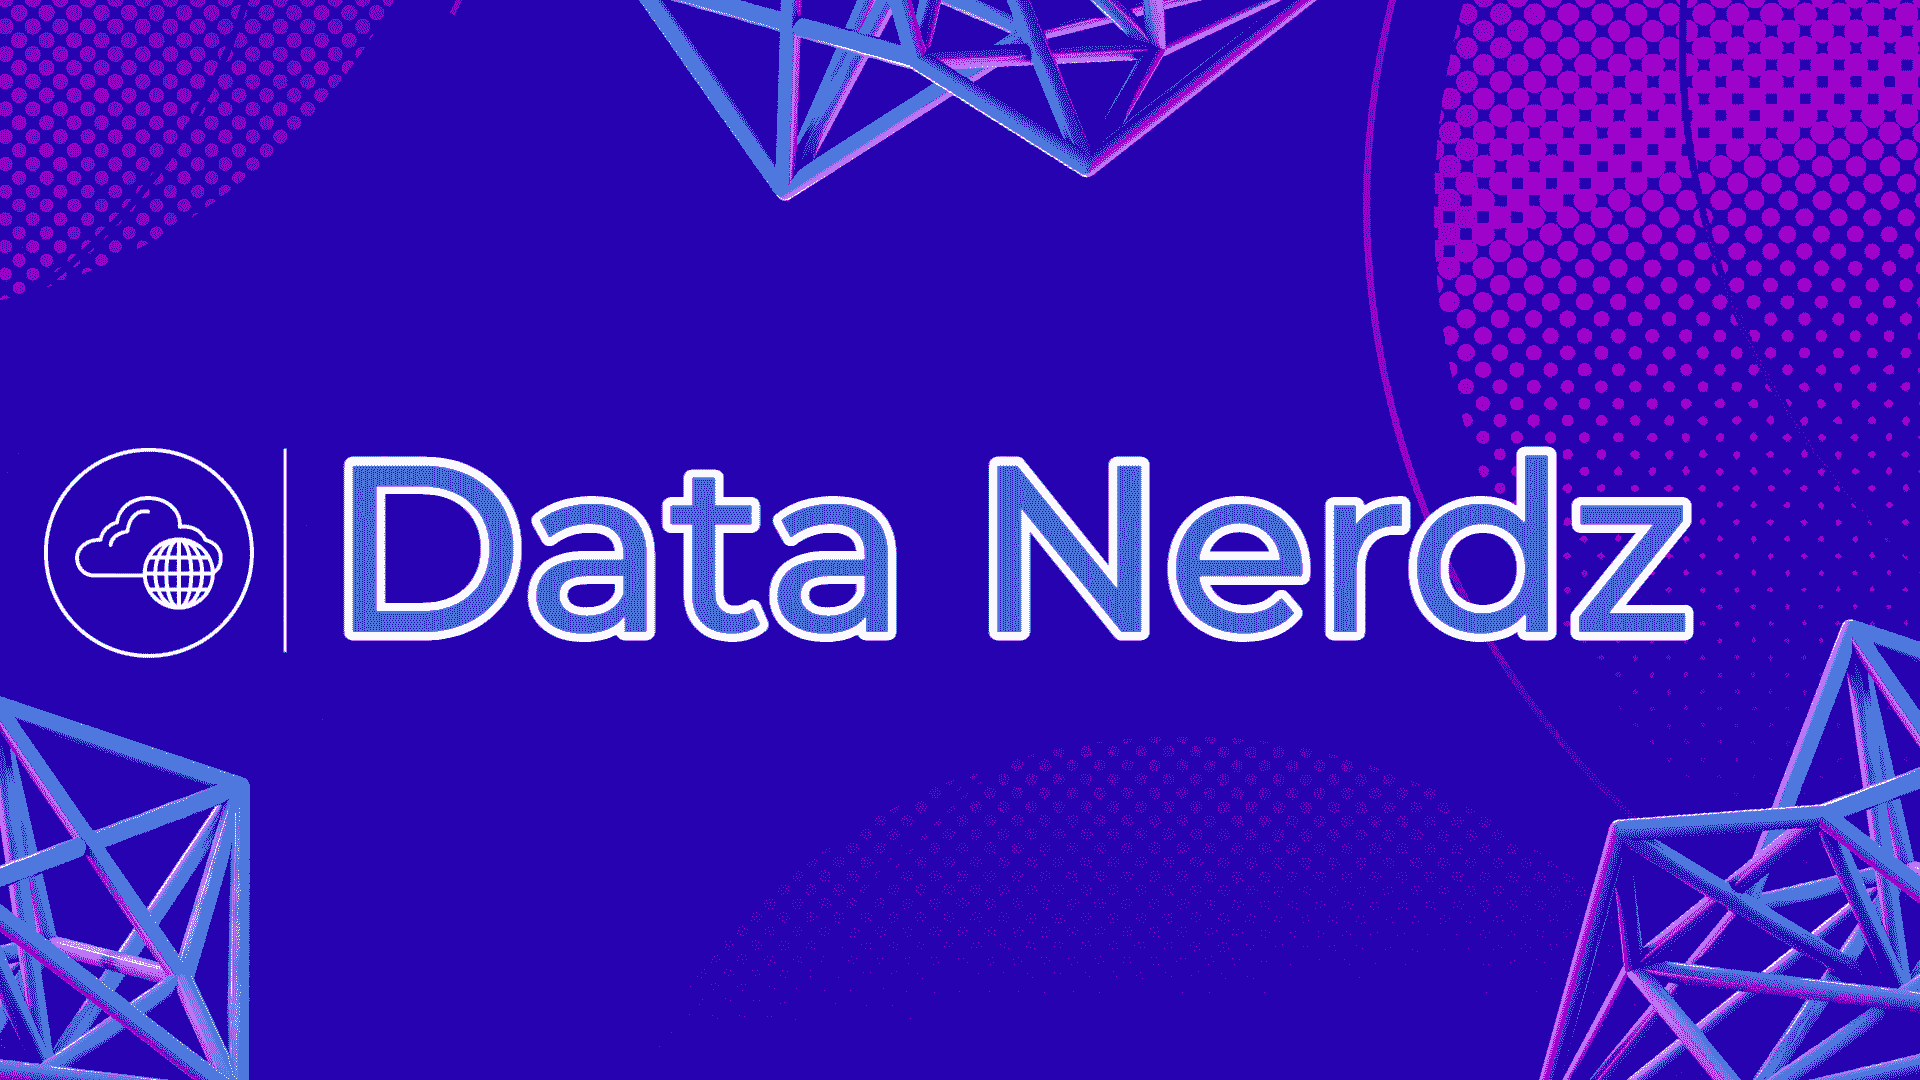 Welcome to Data Nerdz!